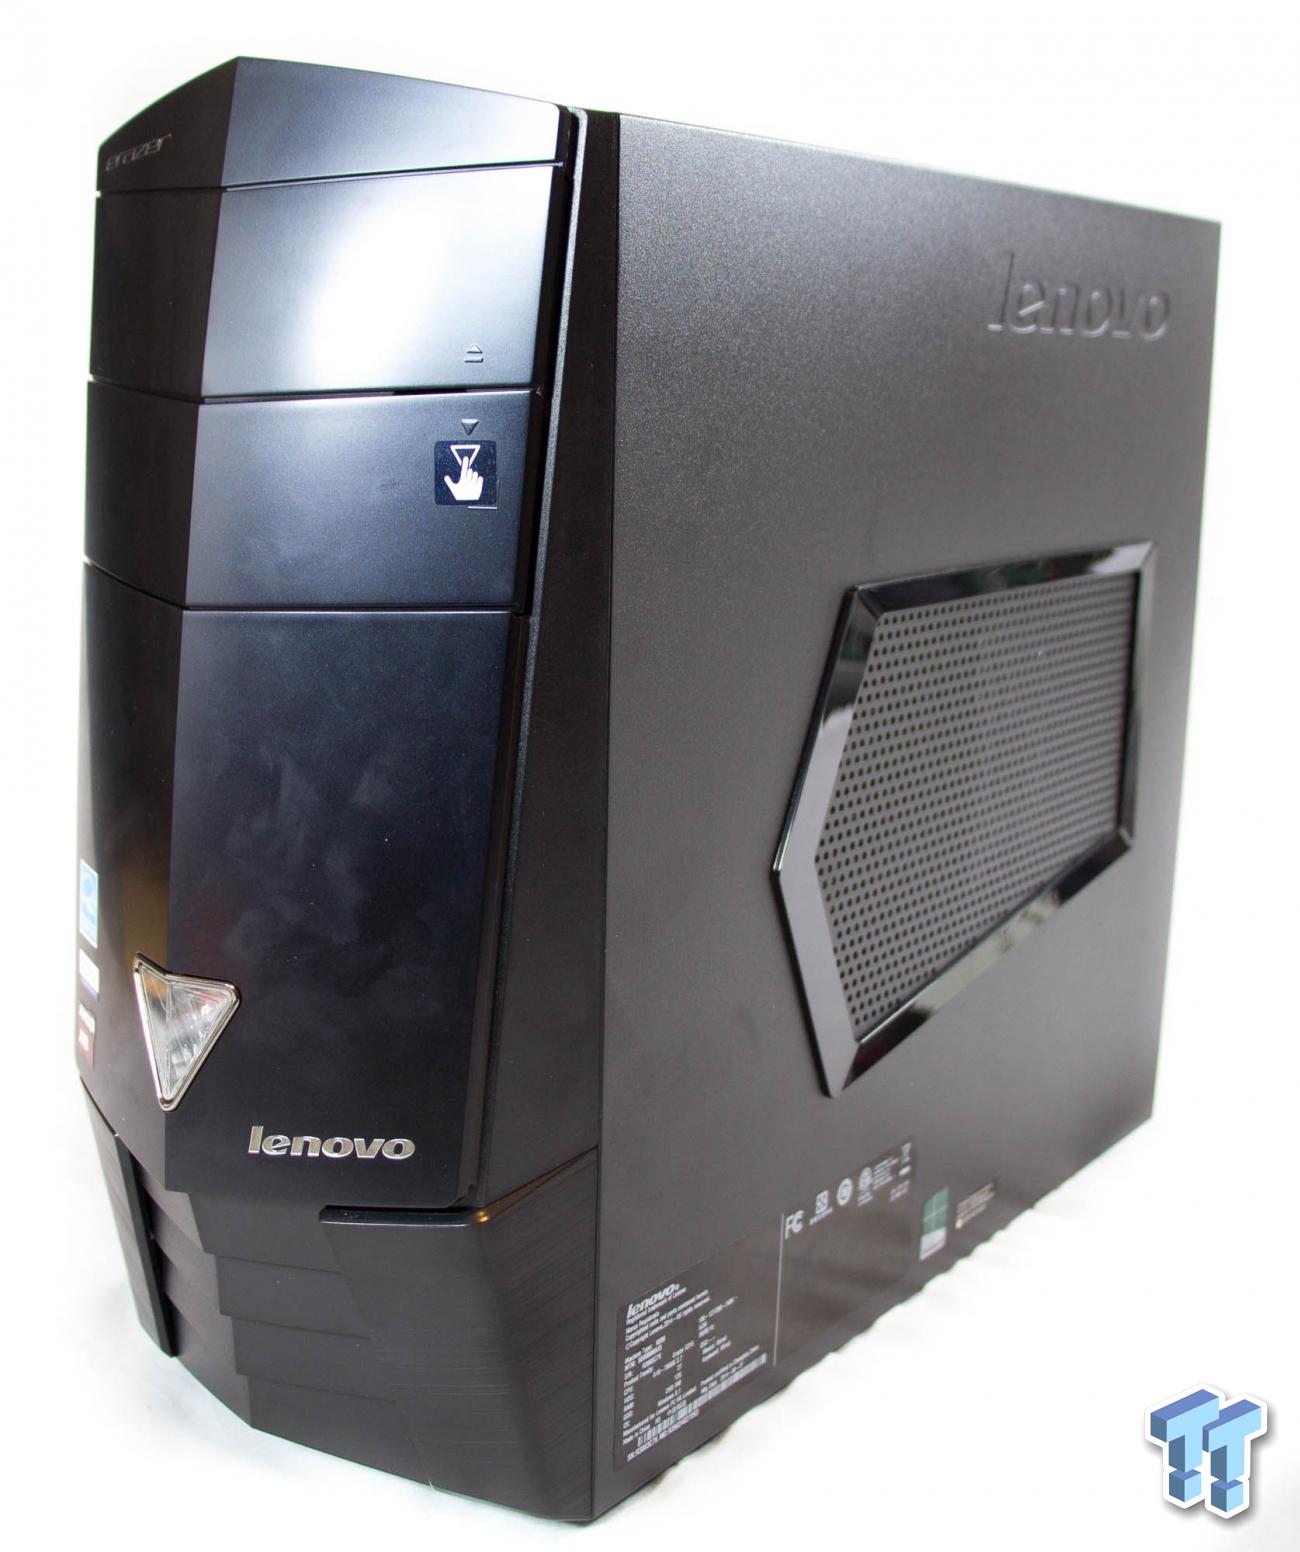 Lenovo Erazer X315 Gaming Desktop PC Review